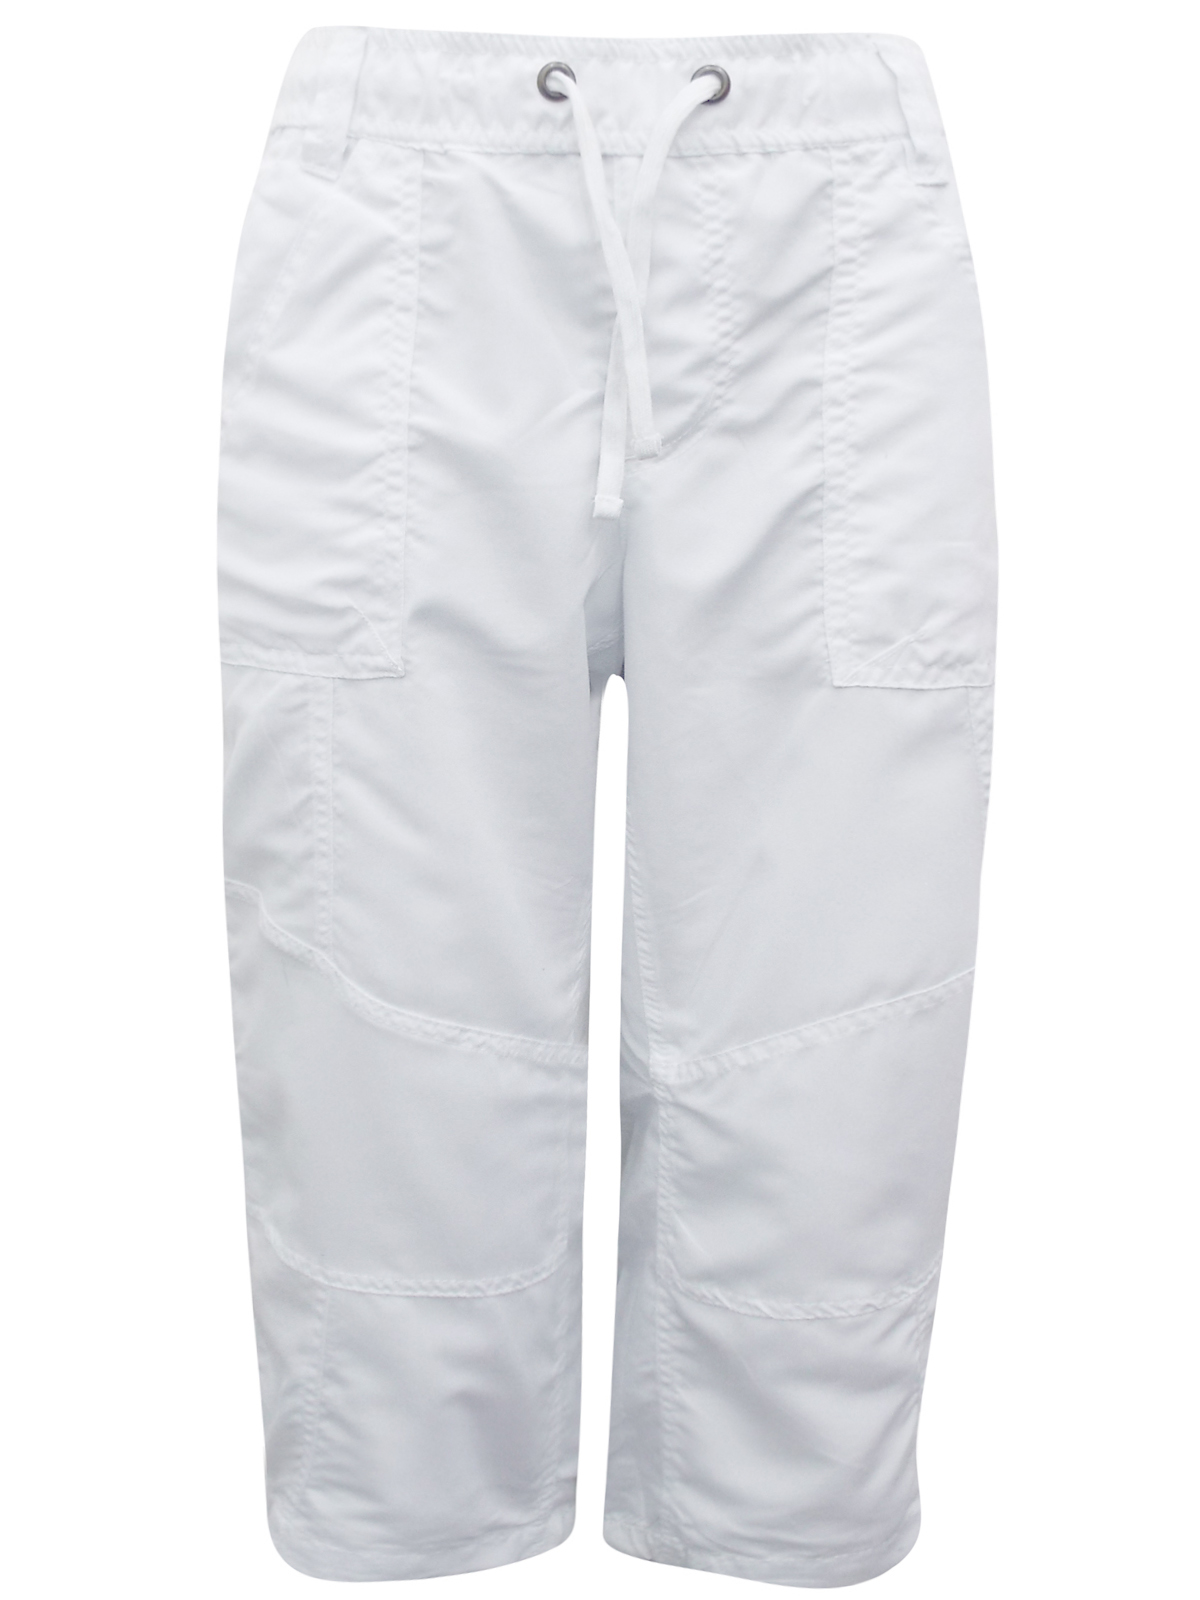 Milla - - Milla WHITE Cropped Cargo Trousers - Size Small to XL